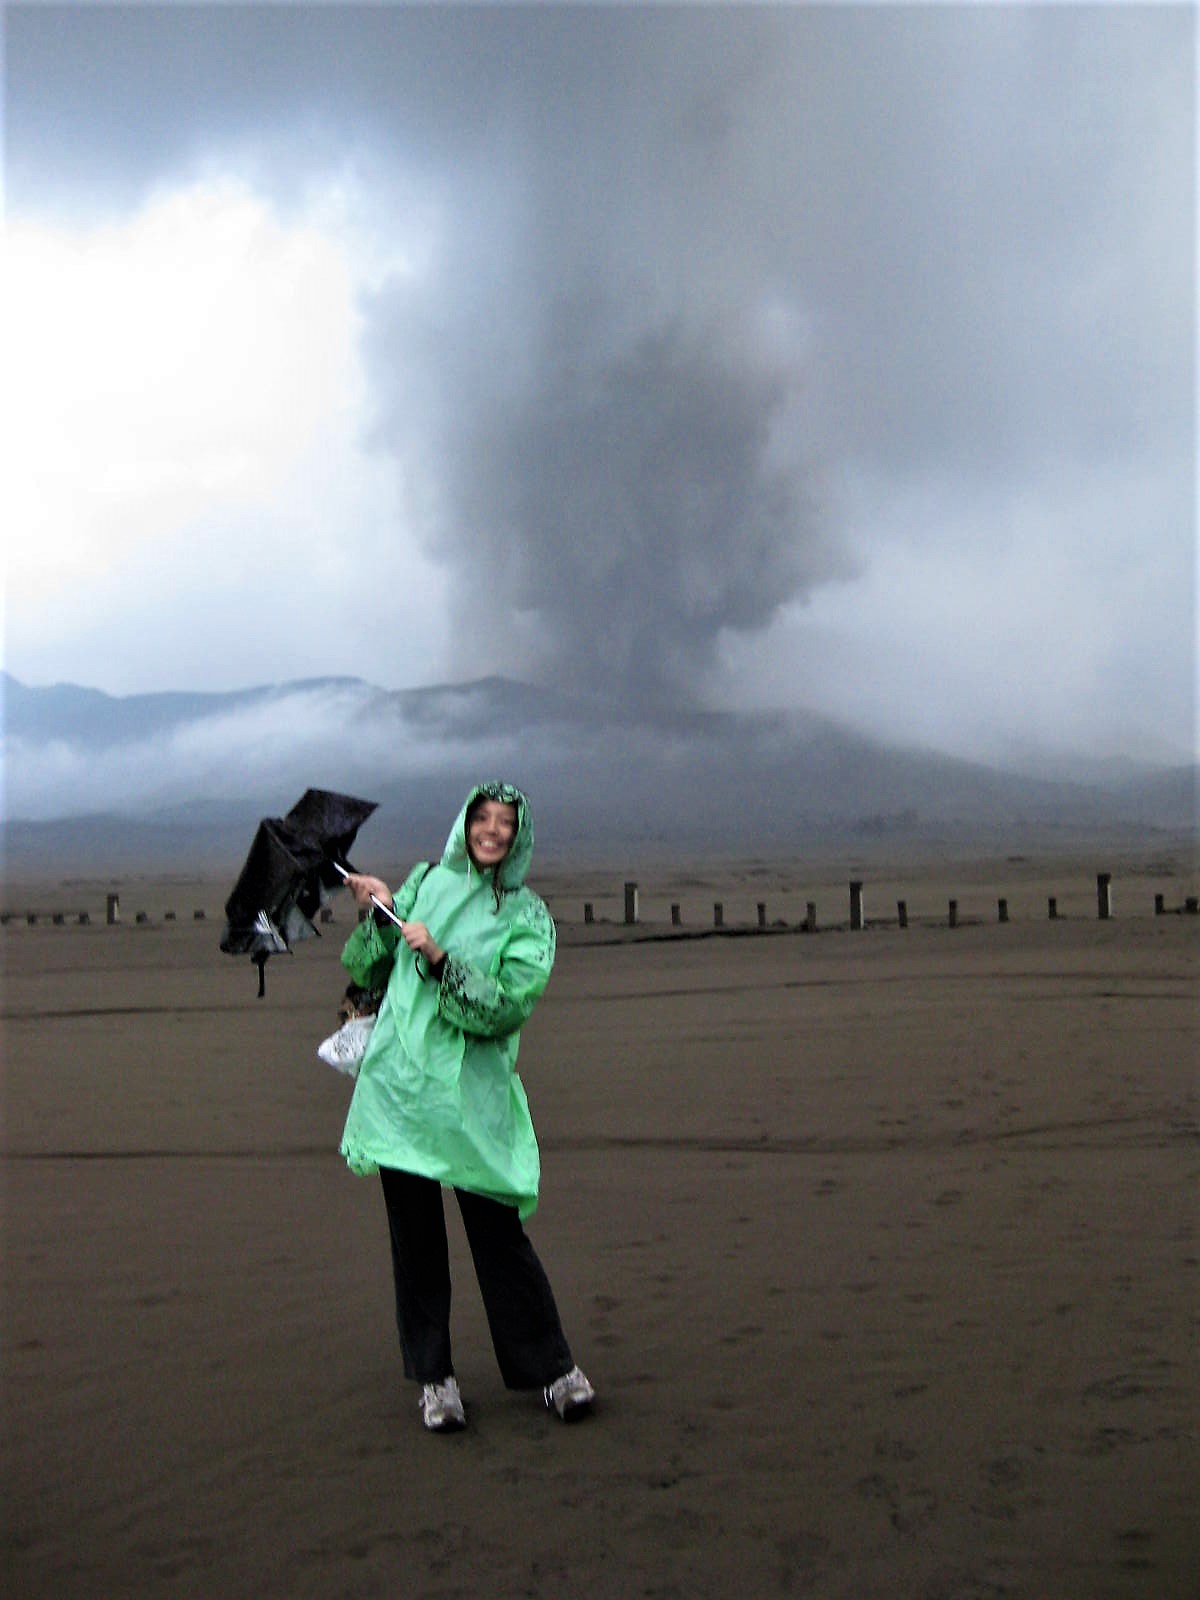 eruption of Mount Bromo in 2010